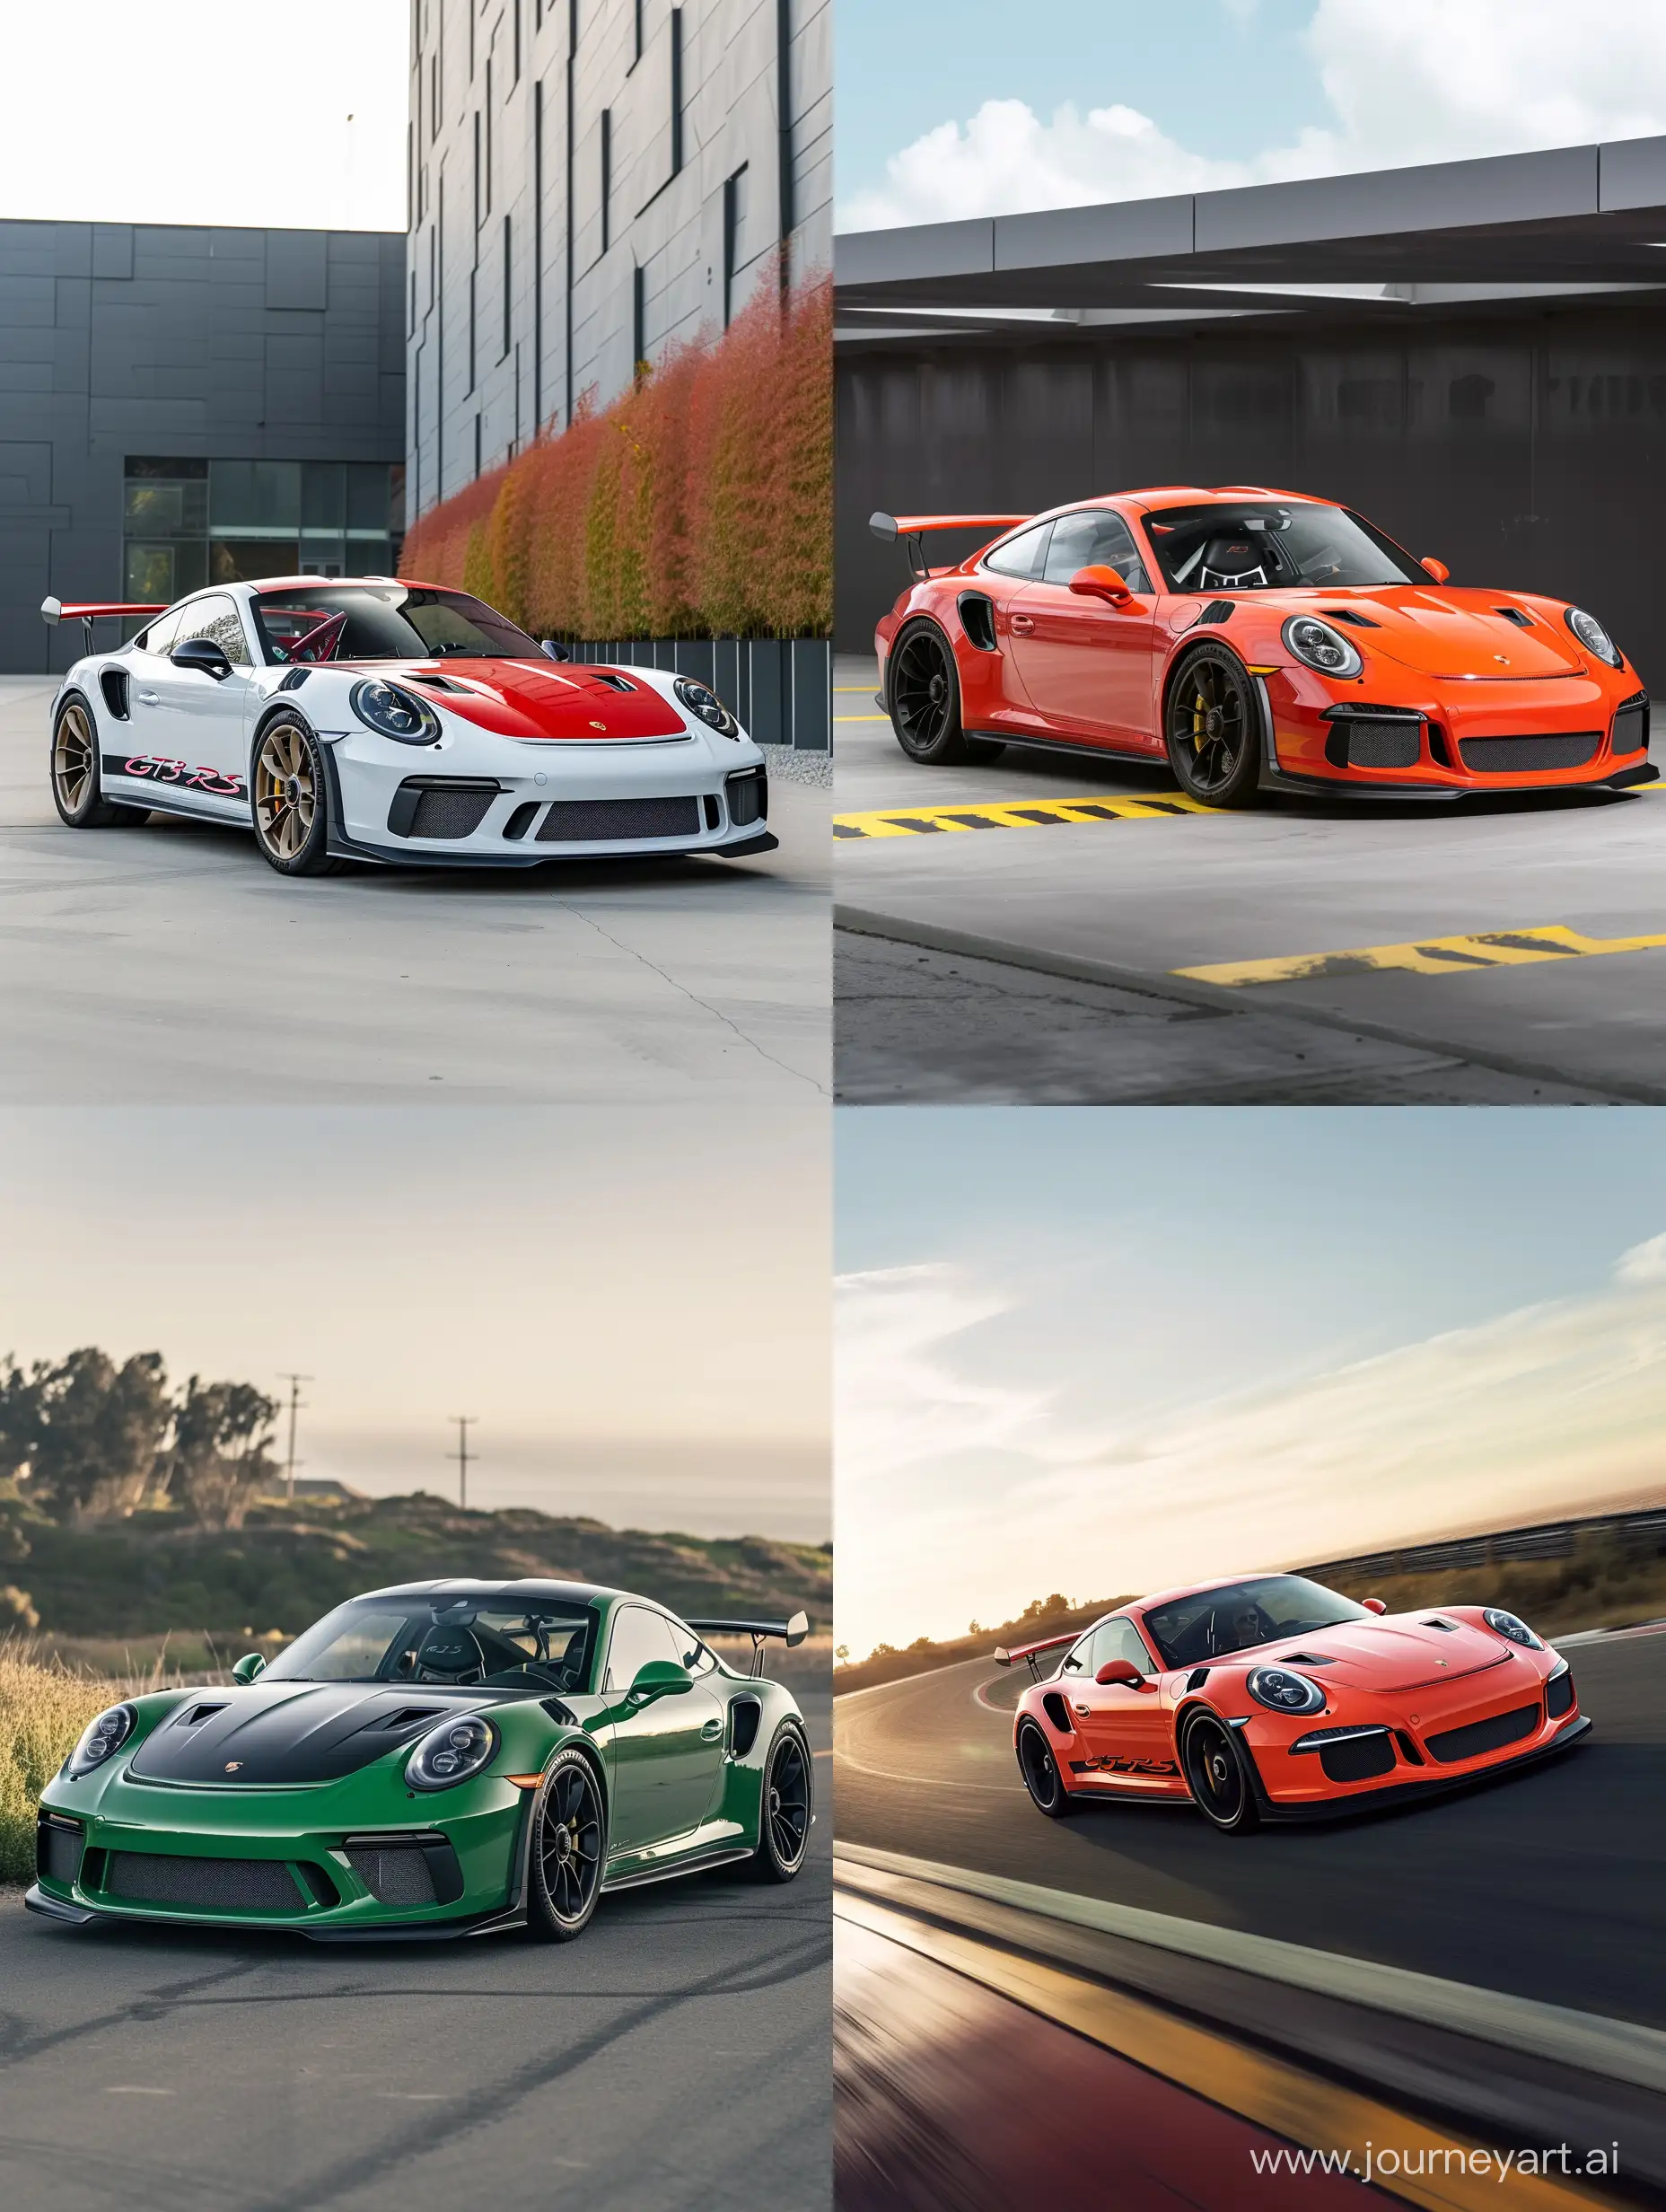 Sleek-Porsche-911-GT3-RS-Racing-Car-in-Vibrant-34-Aspect-Ratio